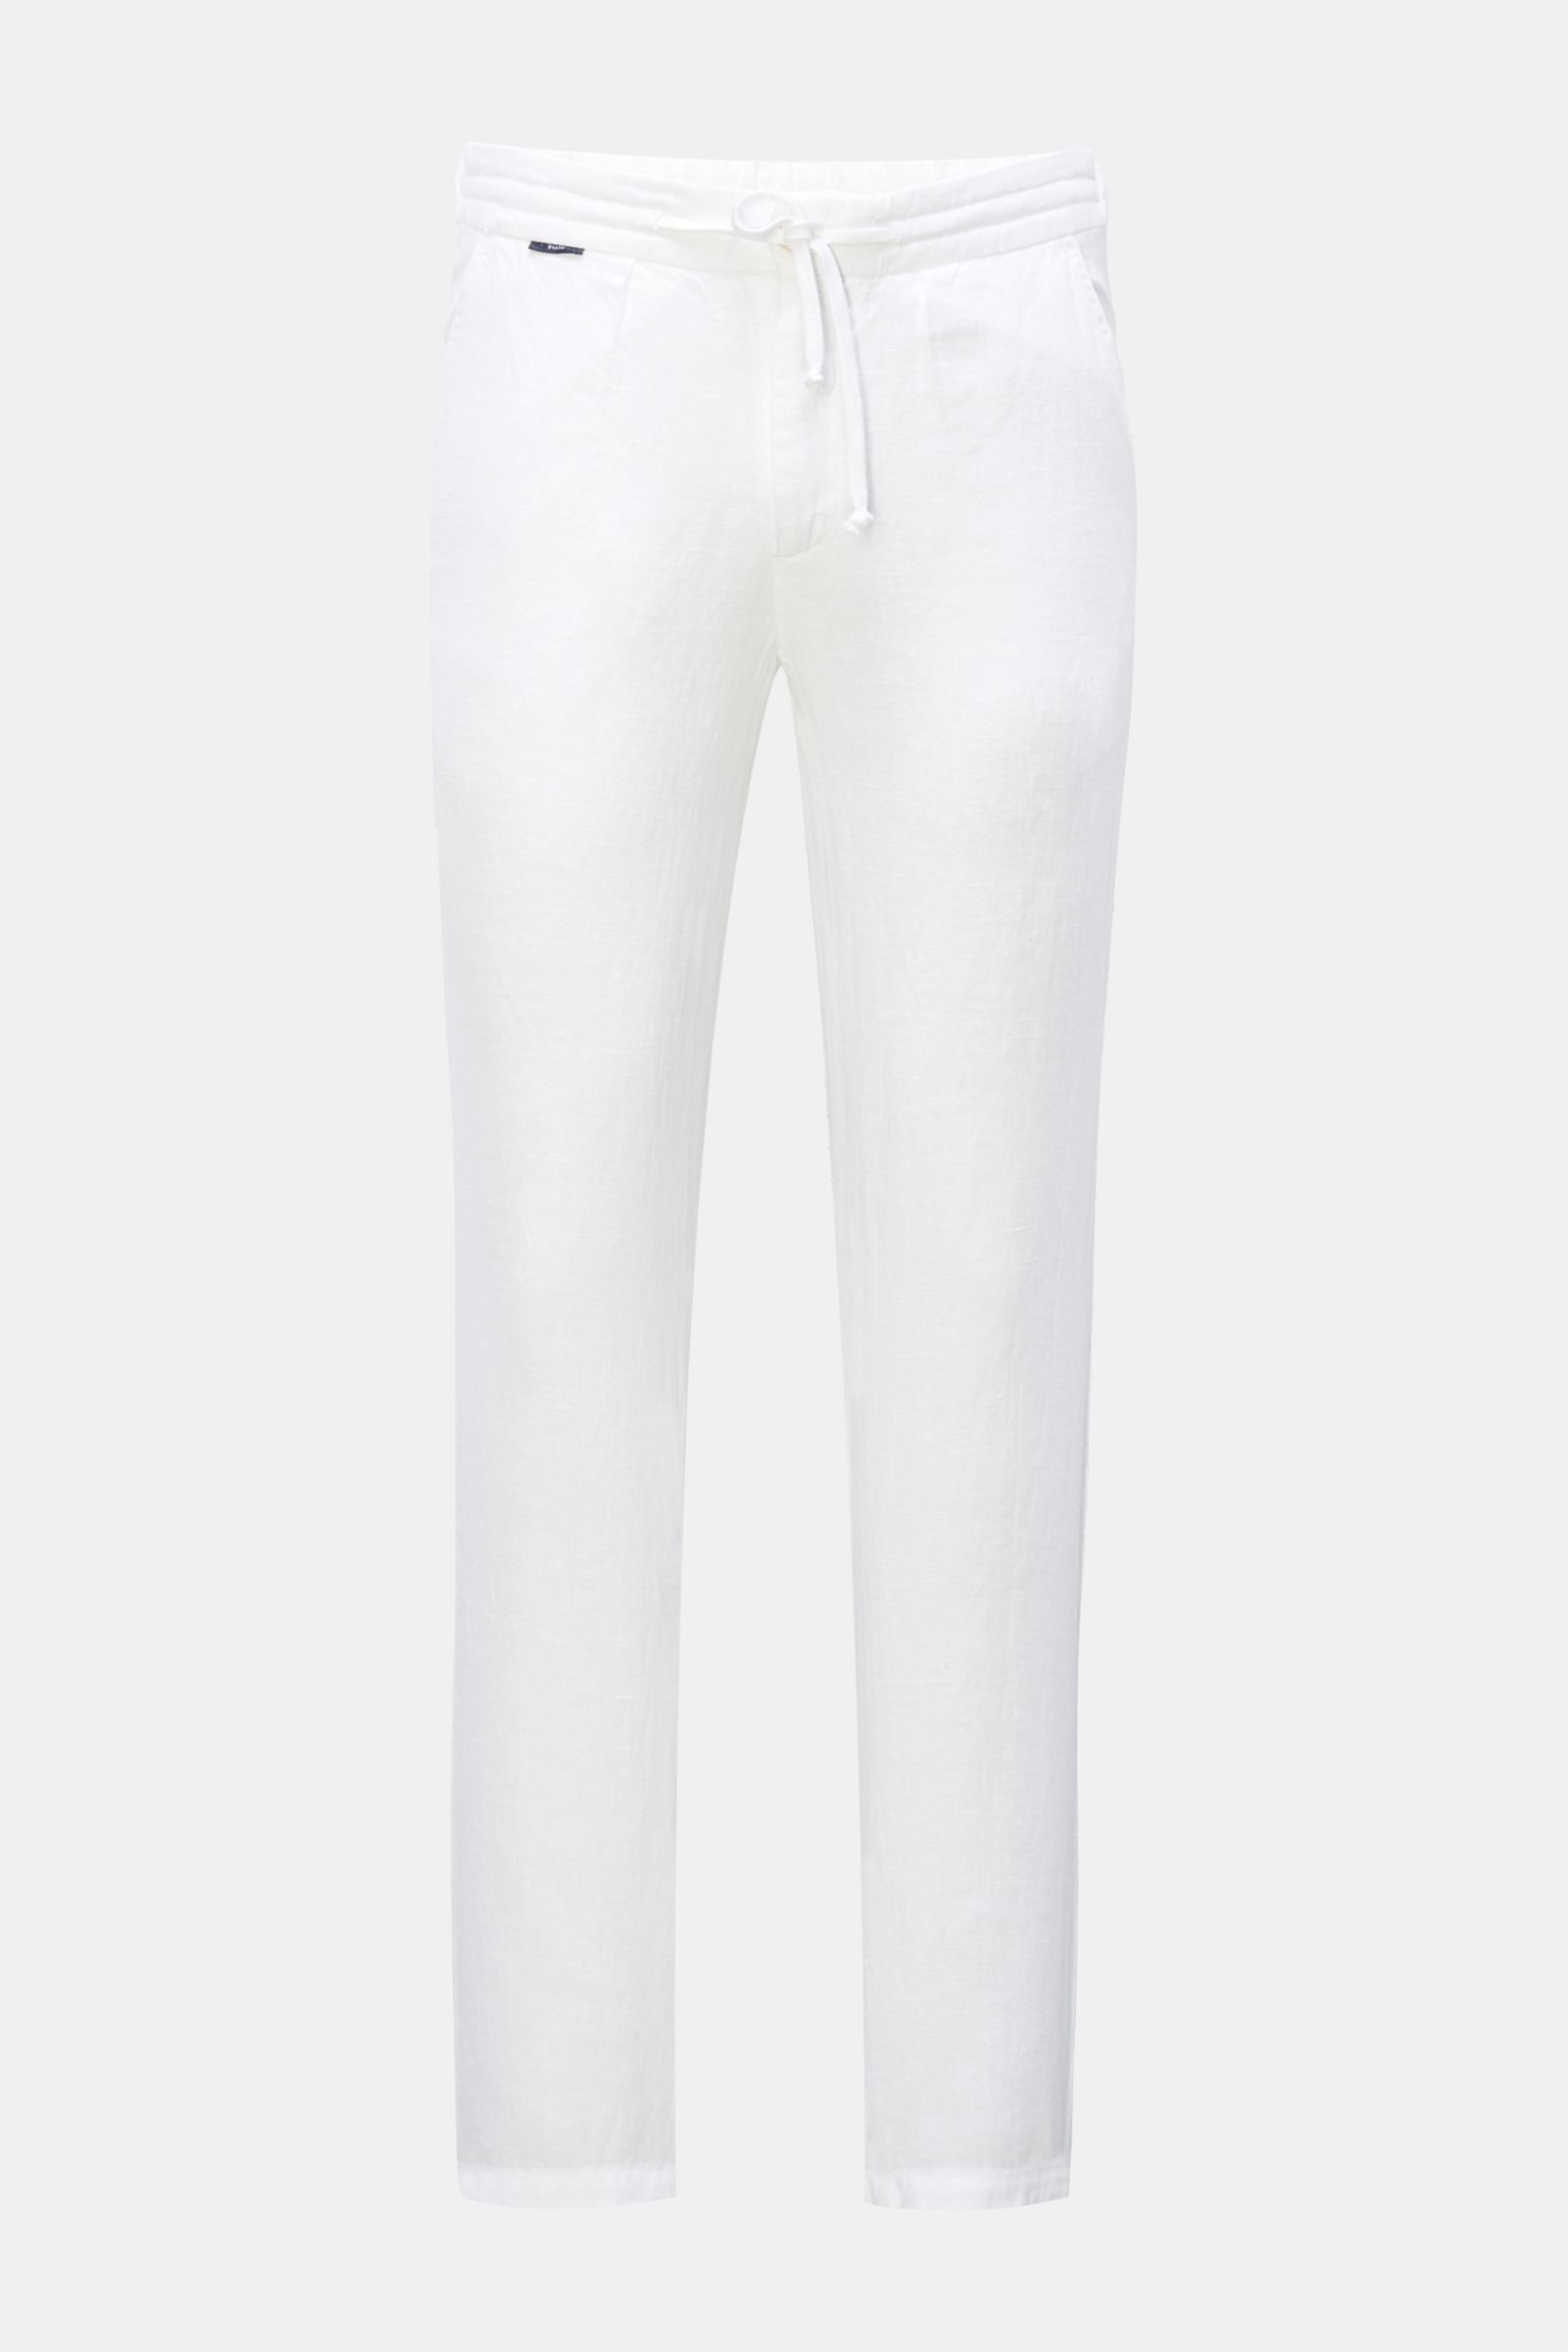 Linen jogger pants 'Linen Pant' white